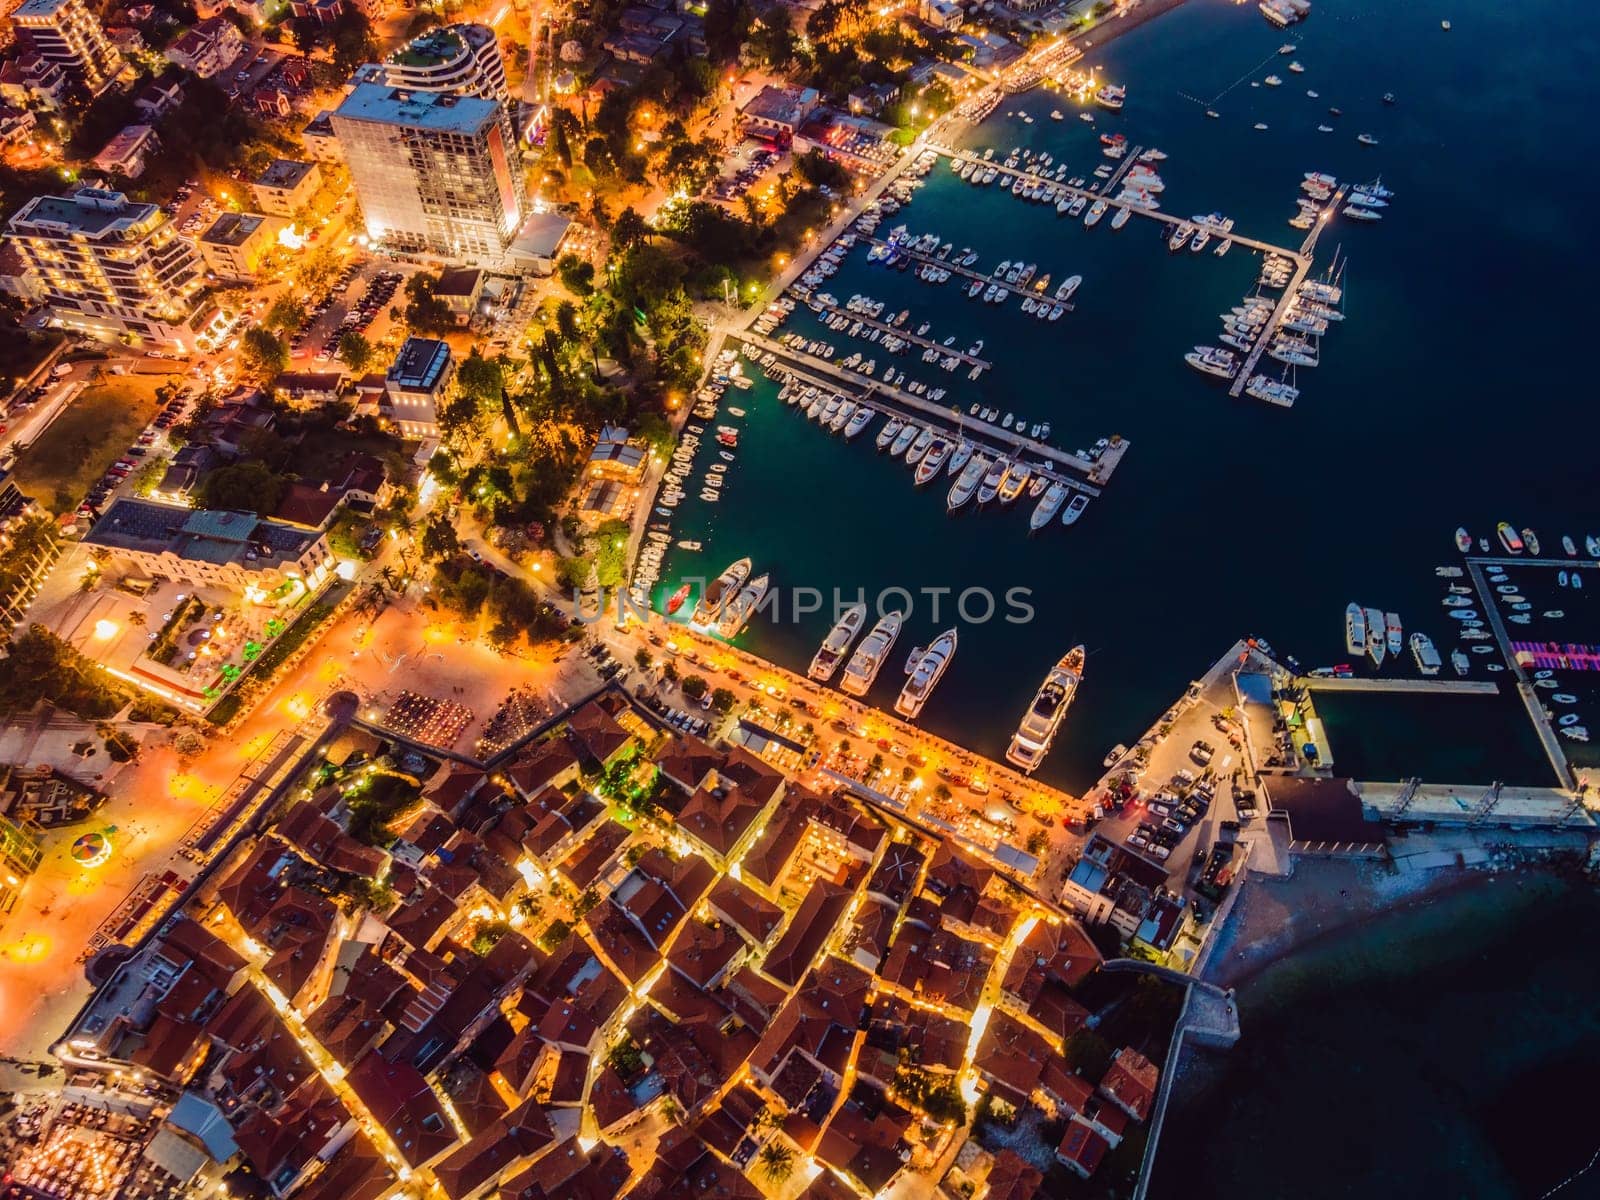 Budva city lights from Montenegro seen from above. Night view. Drone old town Budva at night by galitskaya